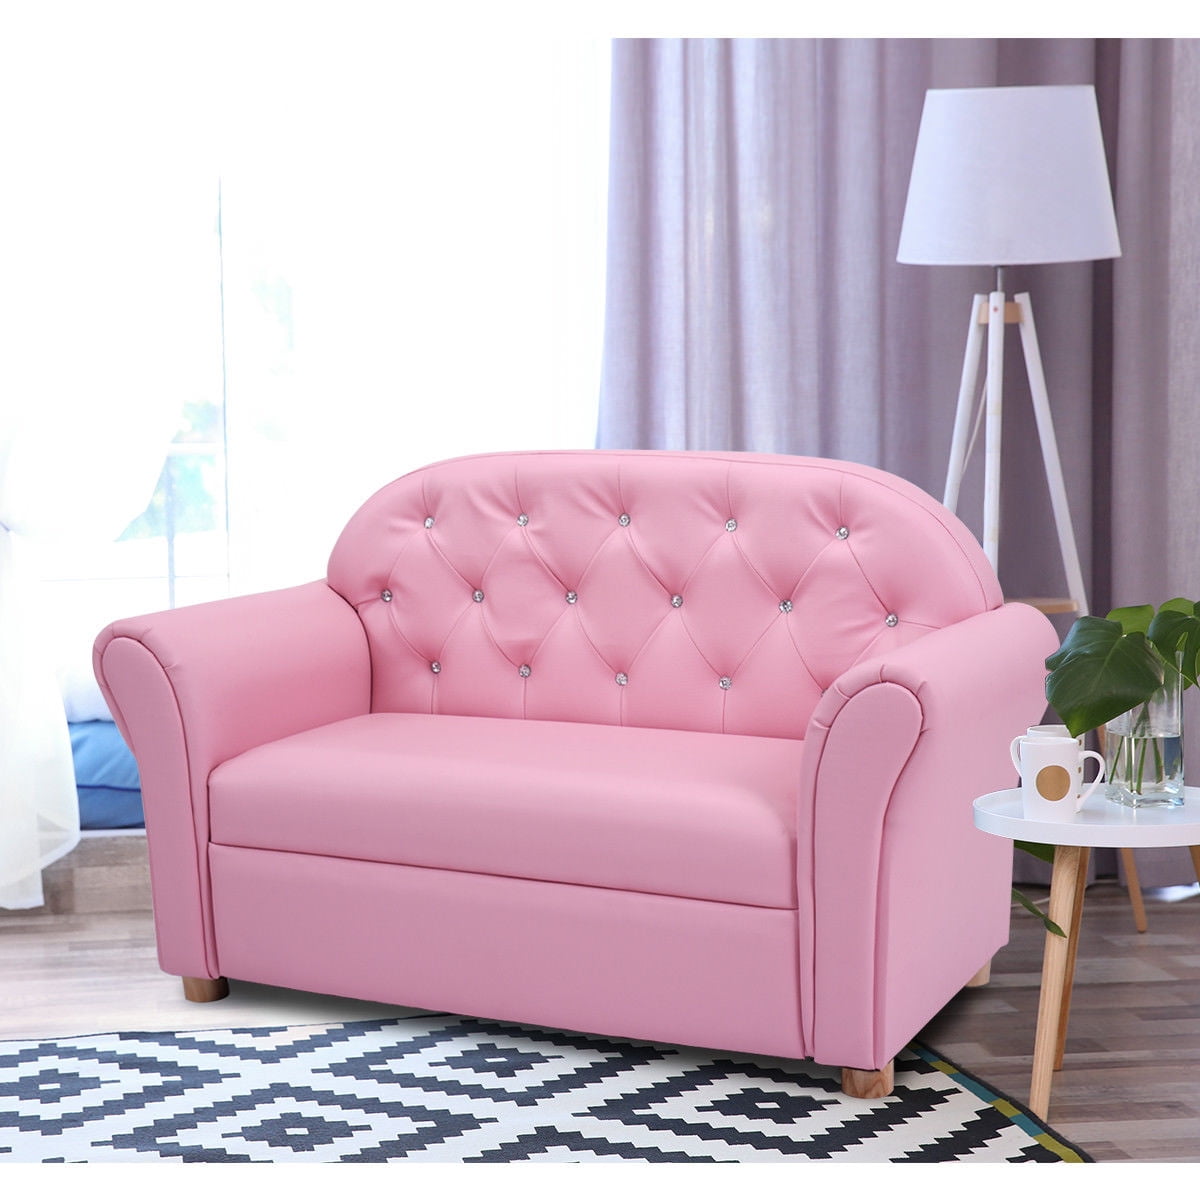 Costway 2 Seat Kids Sofa Comfort Armrest Chair w/2 Pillows Children Gift Pink 